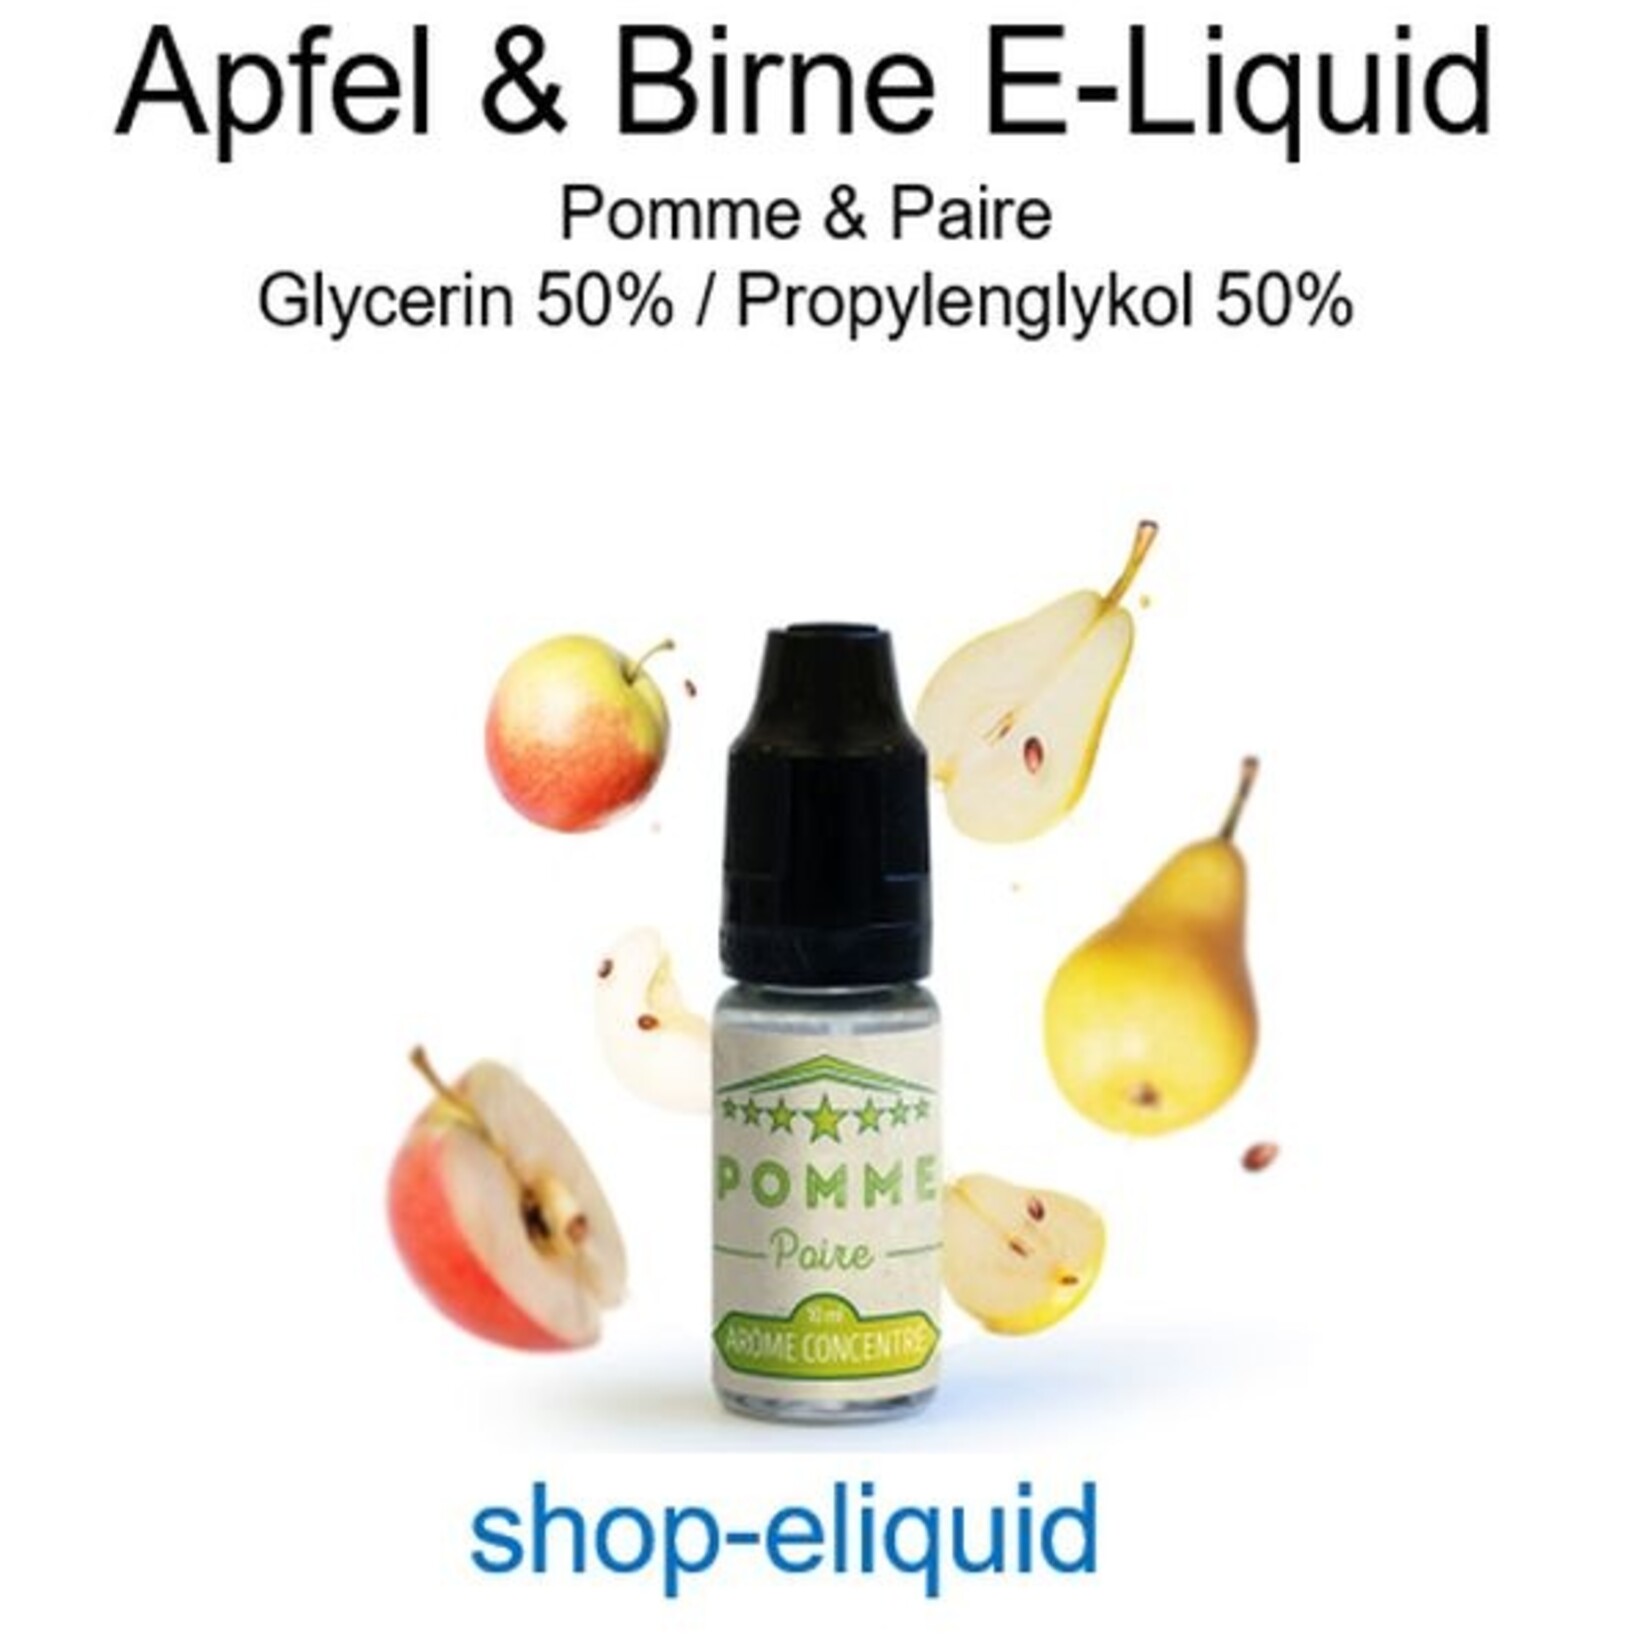 shop-eliquid Apfel & Birne E-Liquid